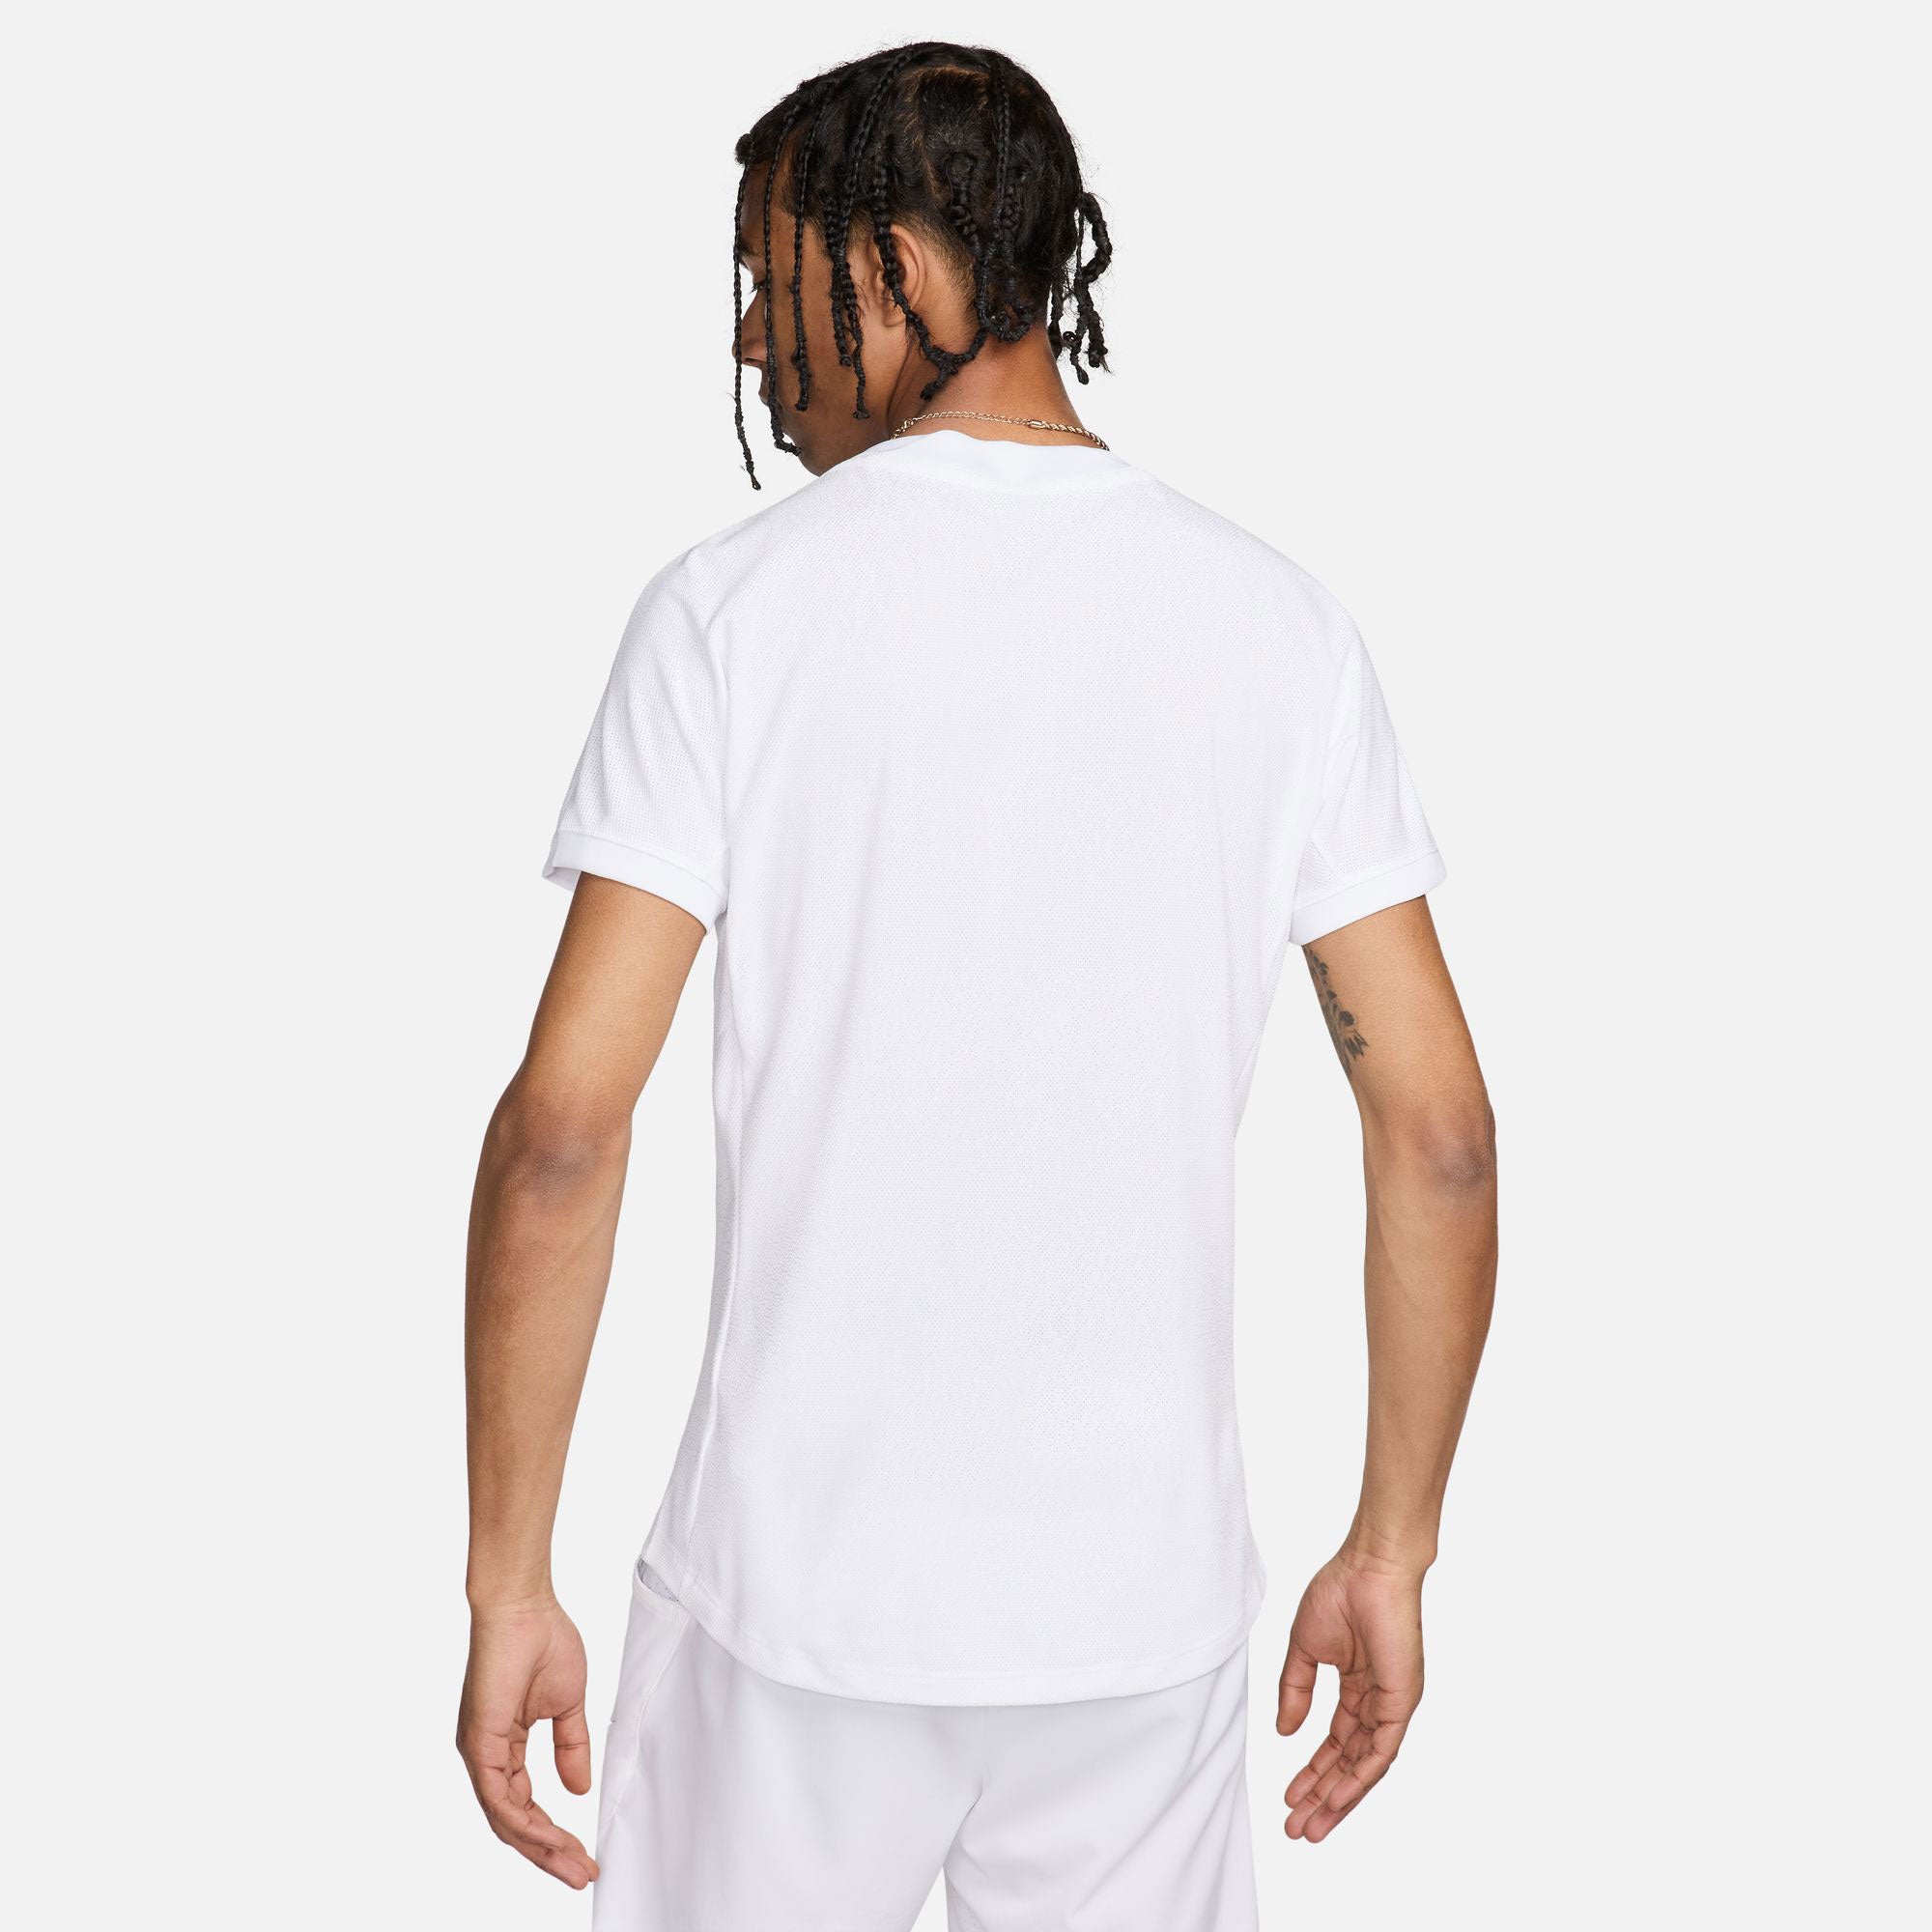 Nike Rafa Men's Dri-FIT ADV Tennis Shirt - White (2)